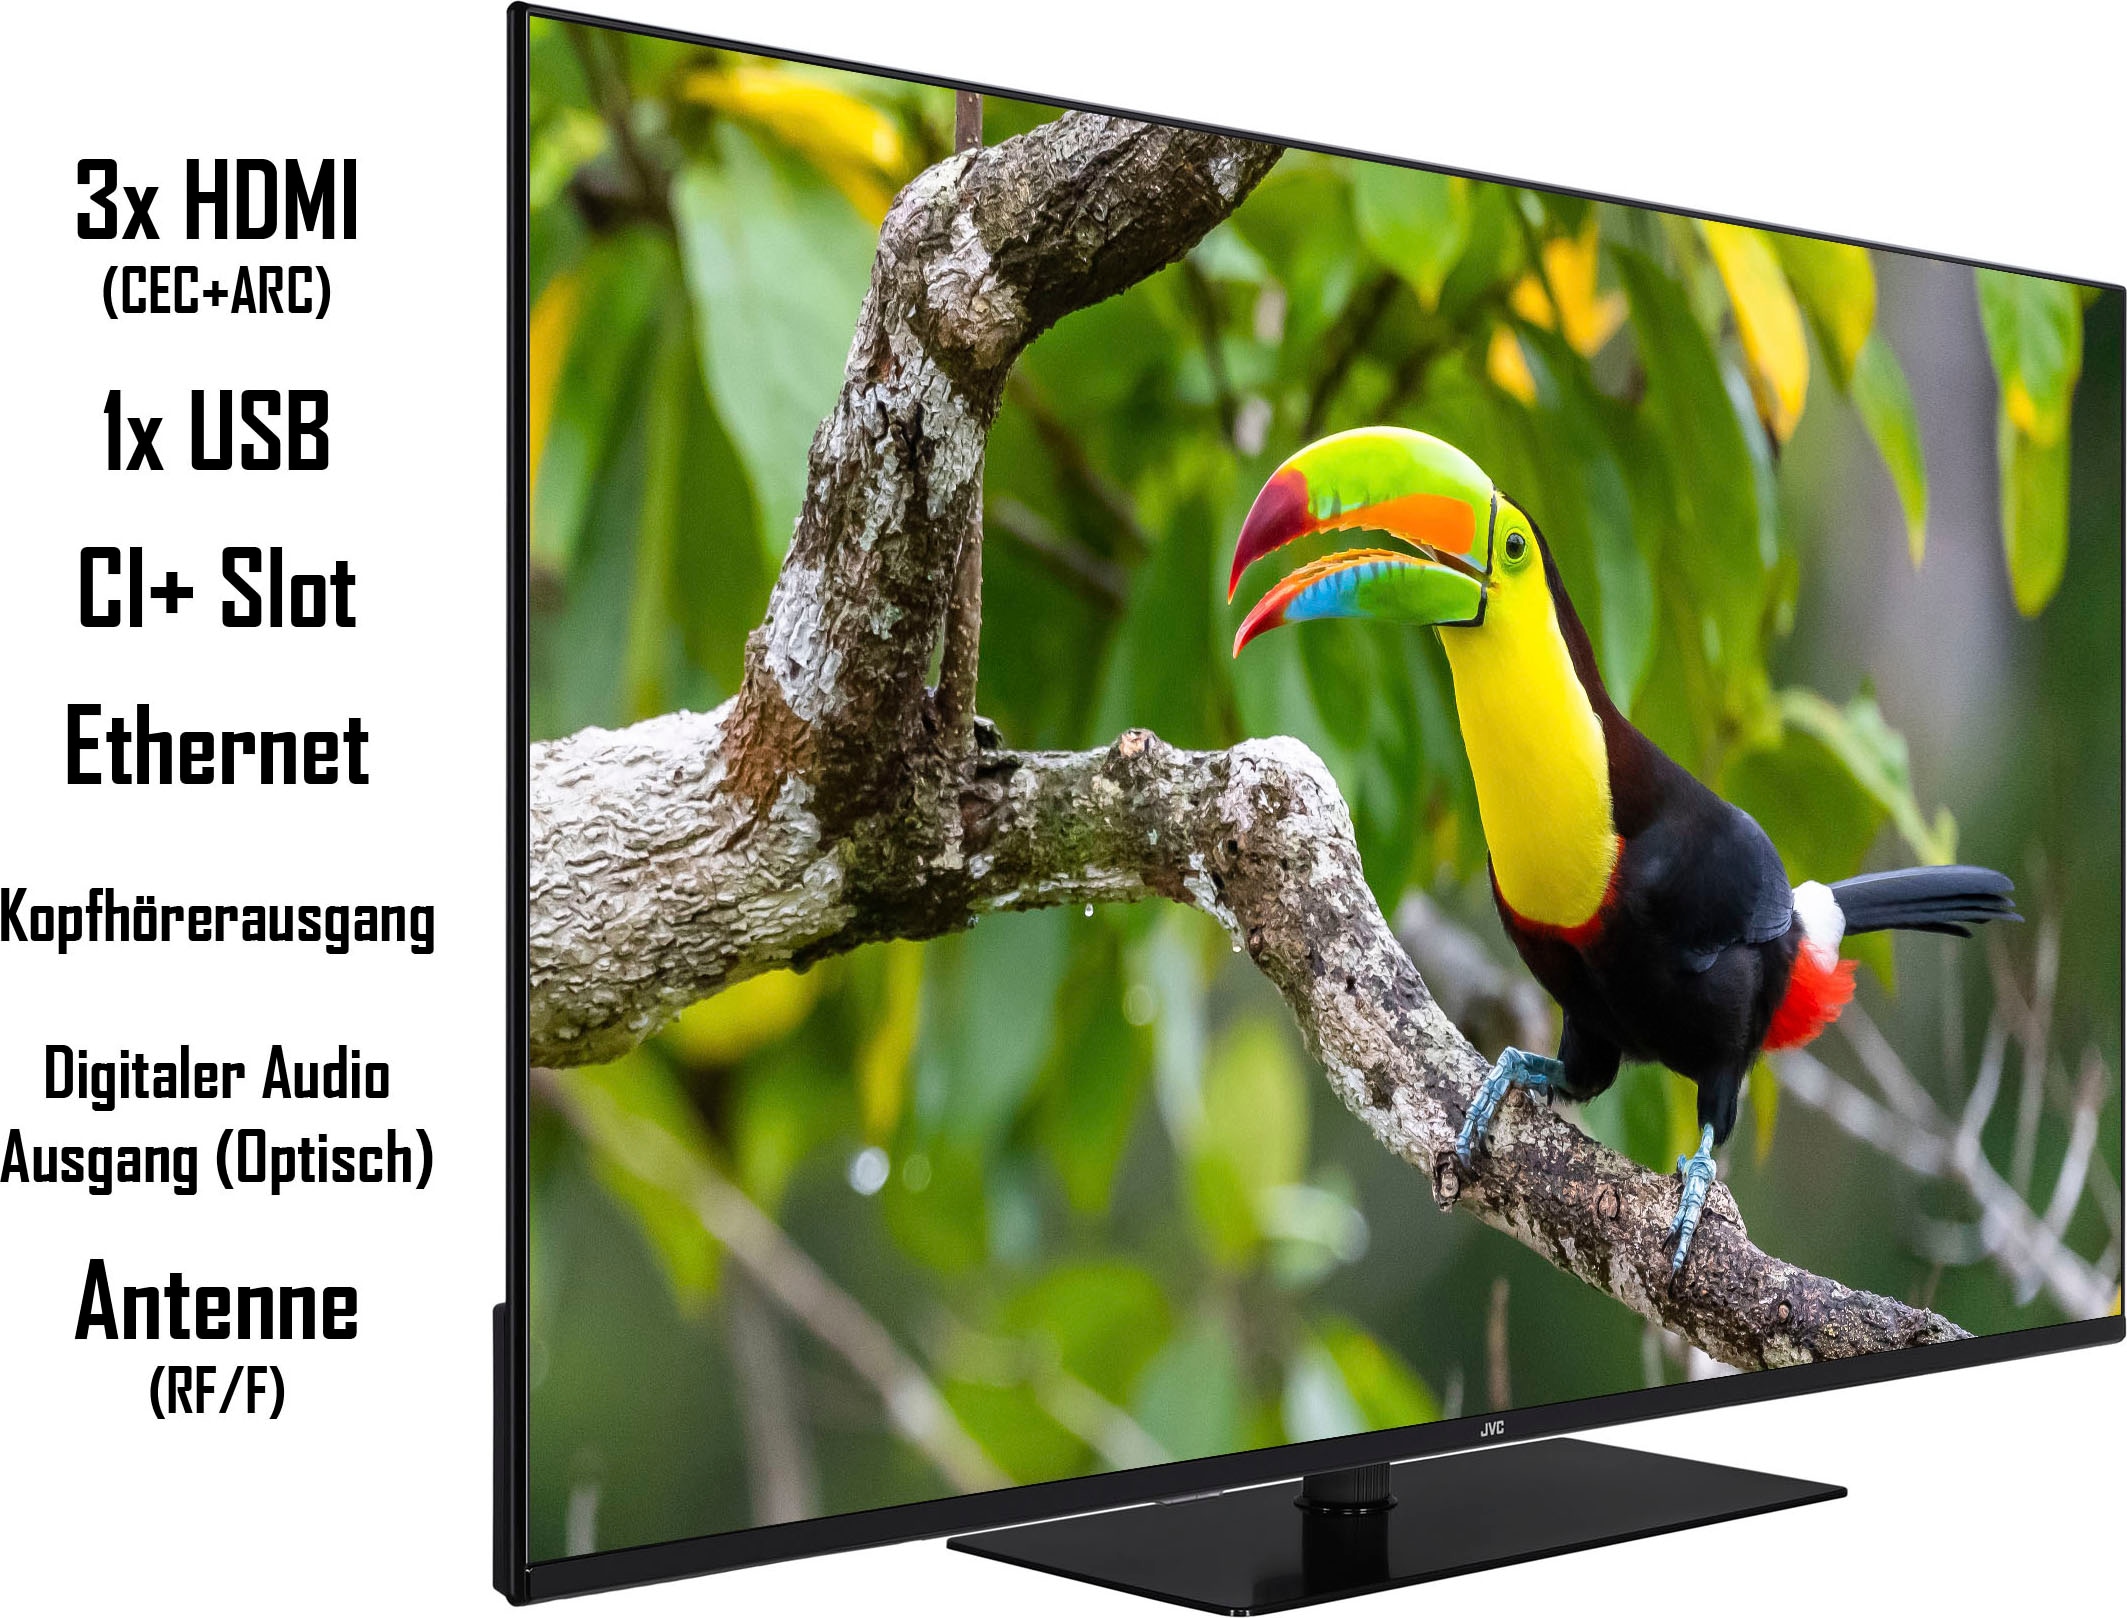 JVC LED-Fernseher, 126 cm/50 Zoll, 4K Ultra HD, Smart-TV